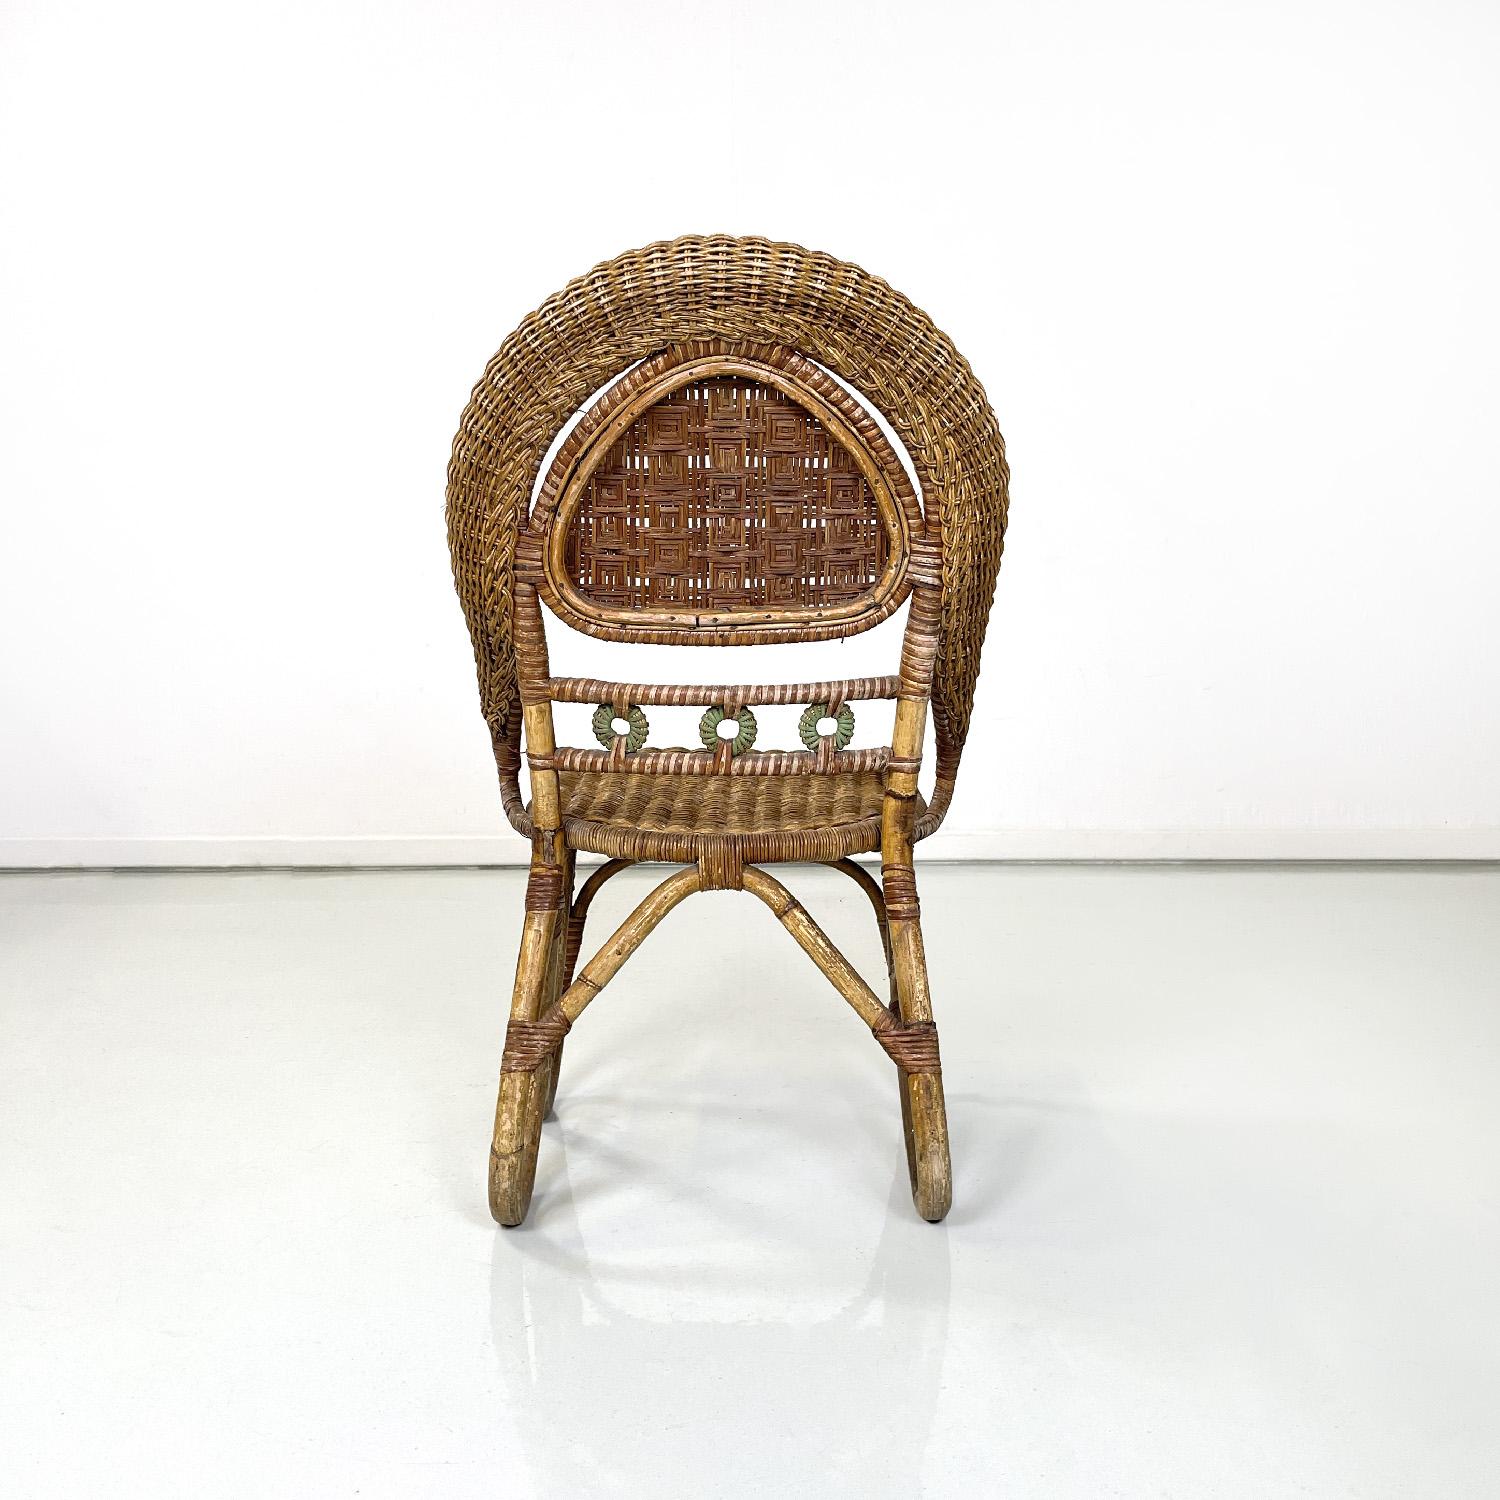 Italiana antique rattan chairs by Mongiardino and Bonacina for Bonacina, 1900s For Sale 1